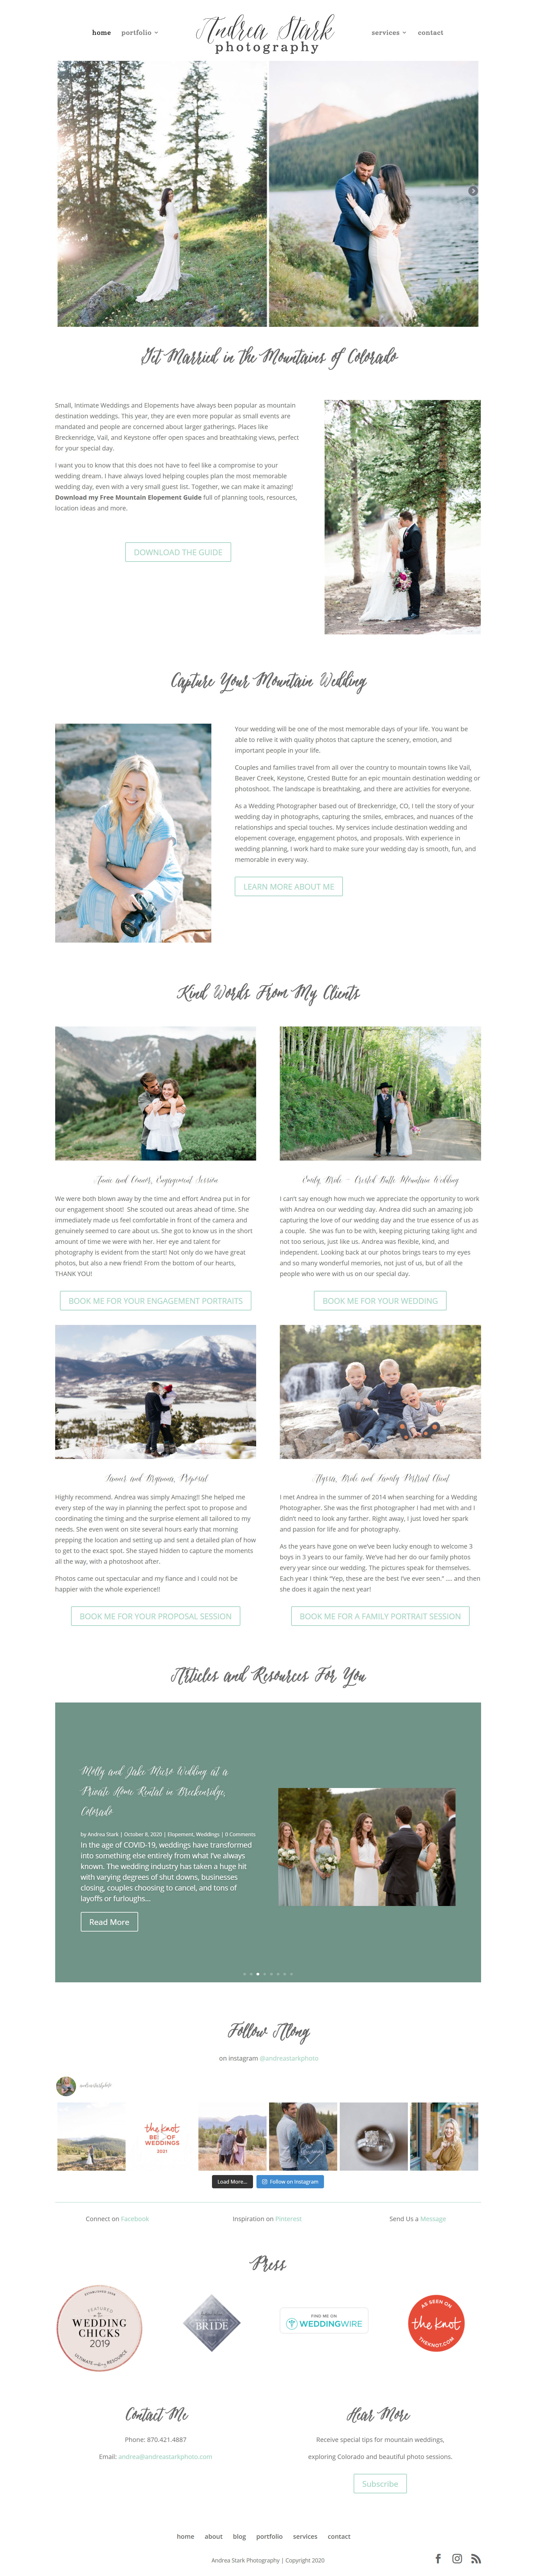 Breckenridge Mountain Wedding and Family Portrait Photographer